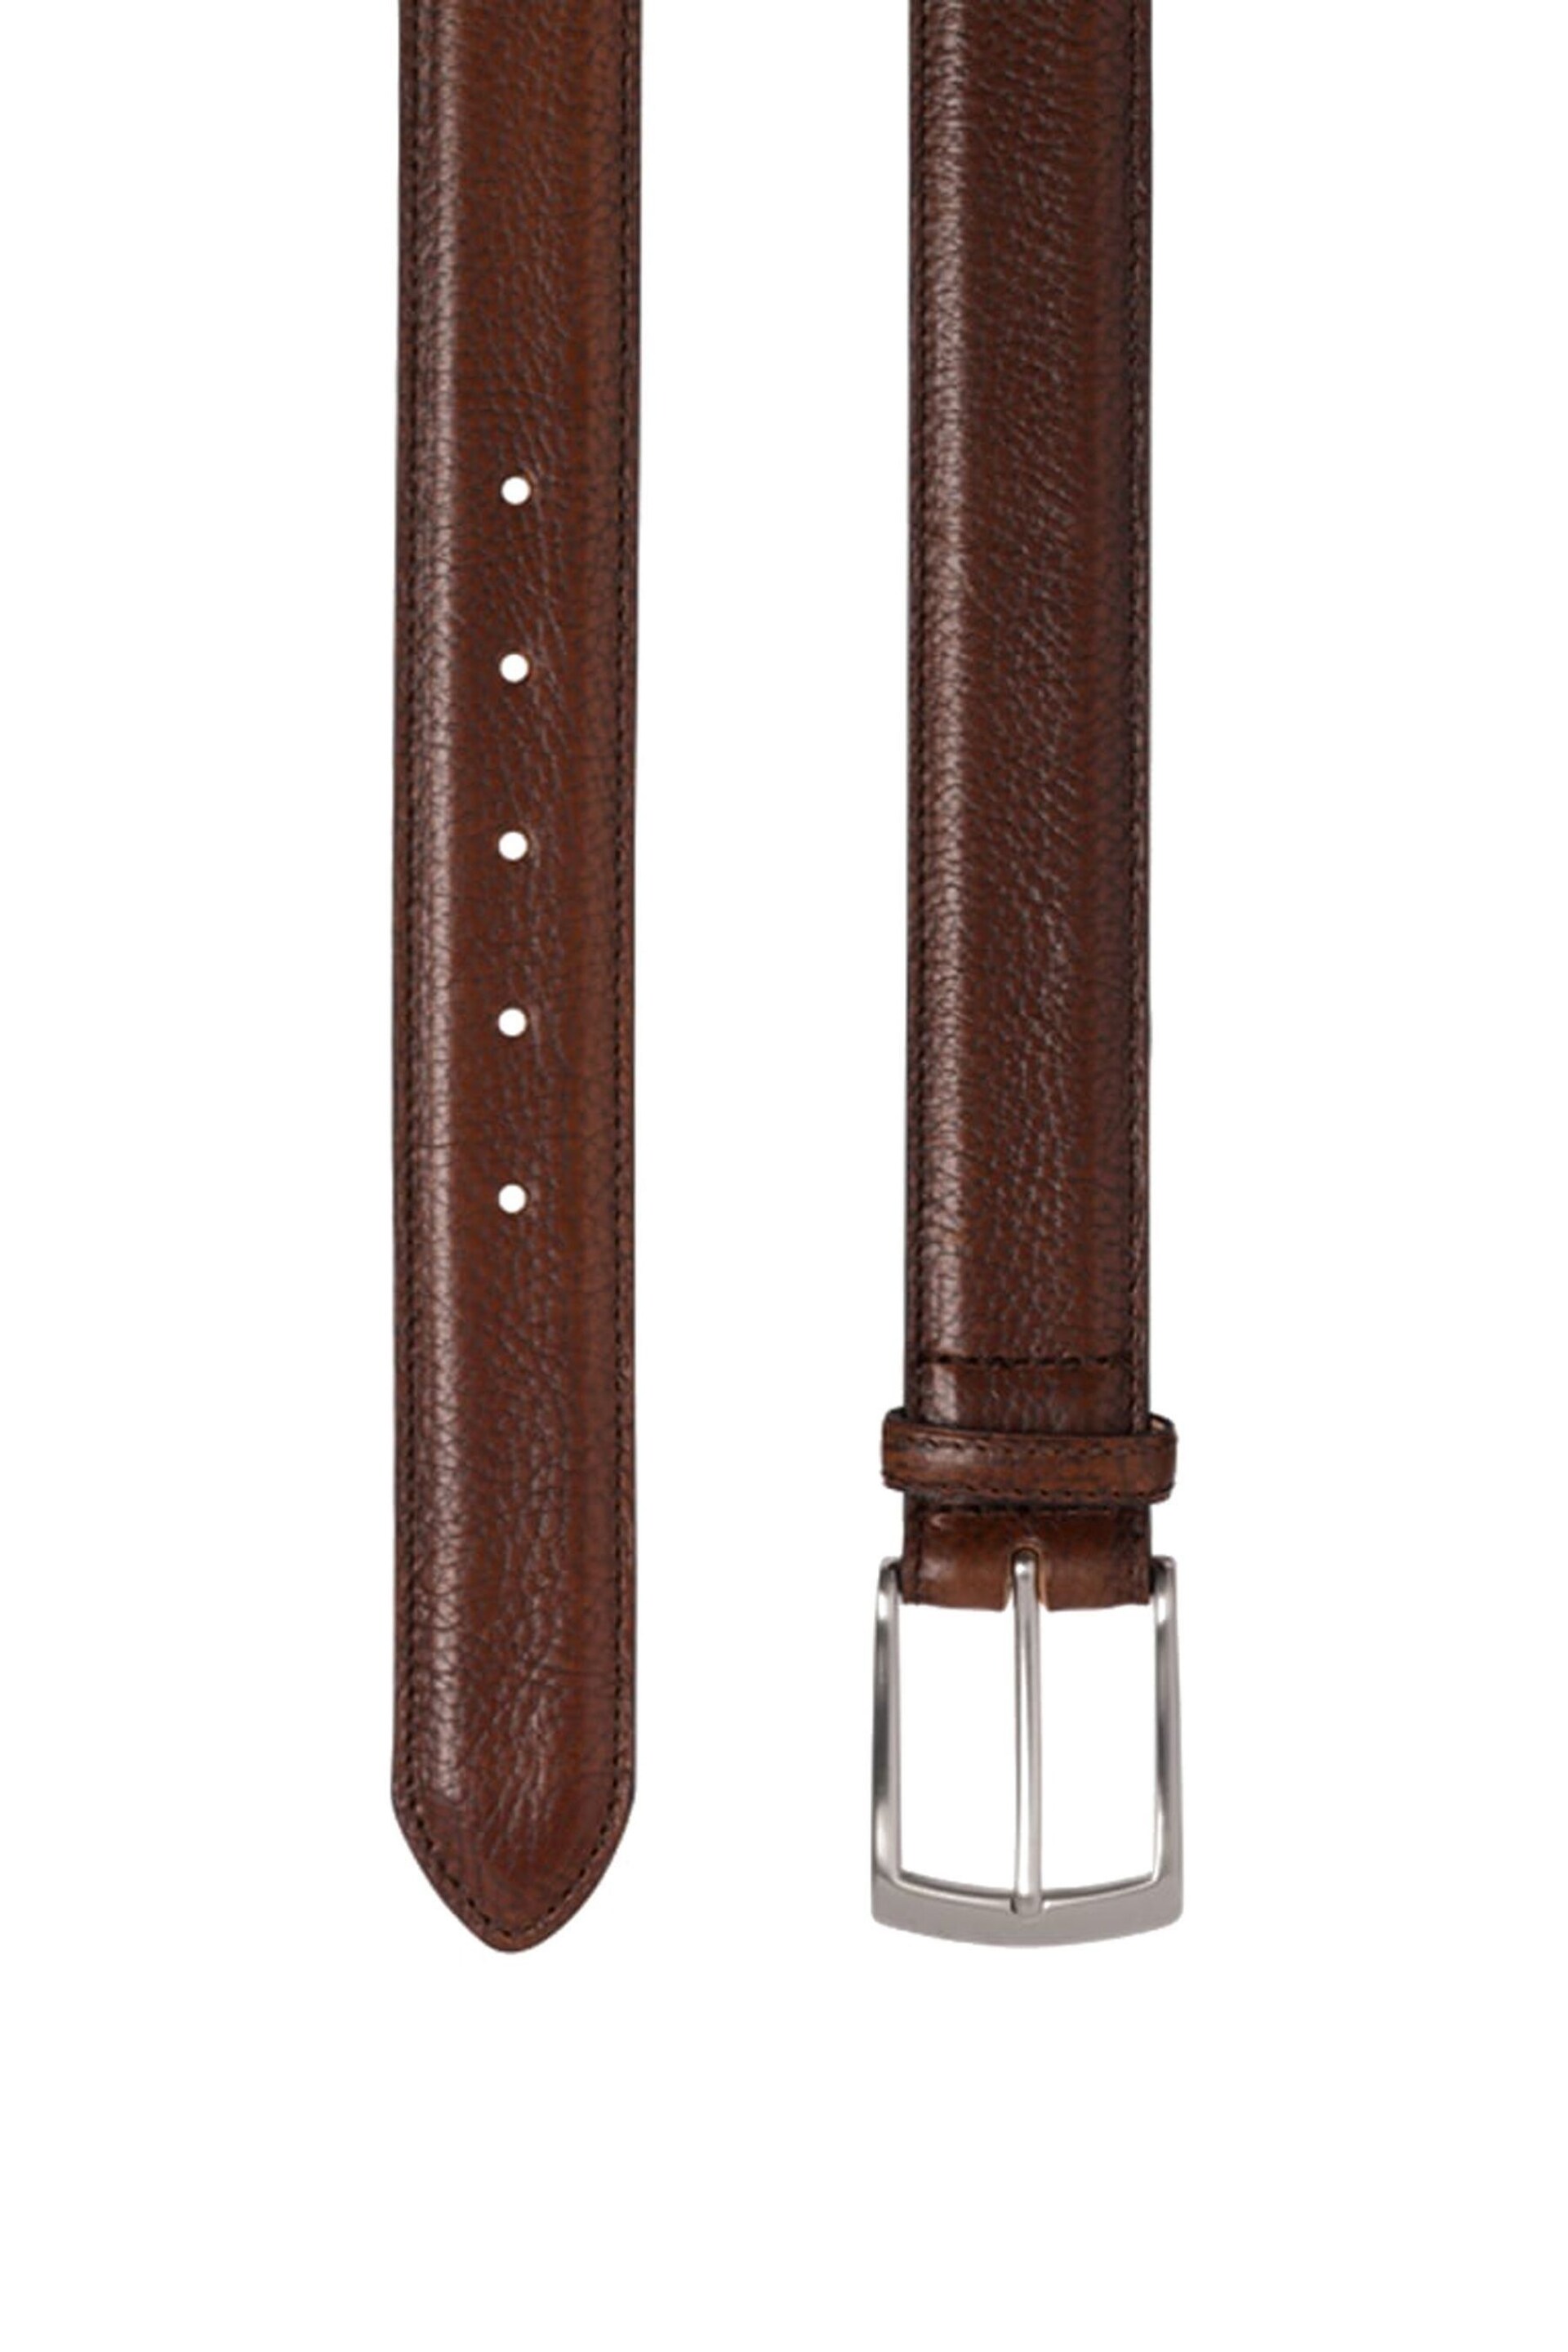 Loake Henry Brown Leather Belt - Image 2 of 2